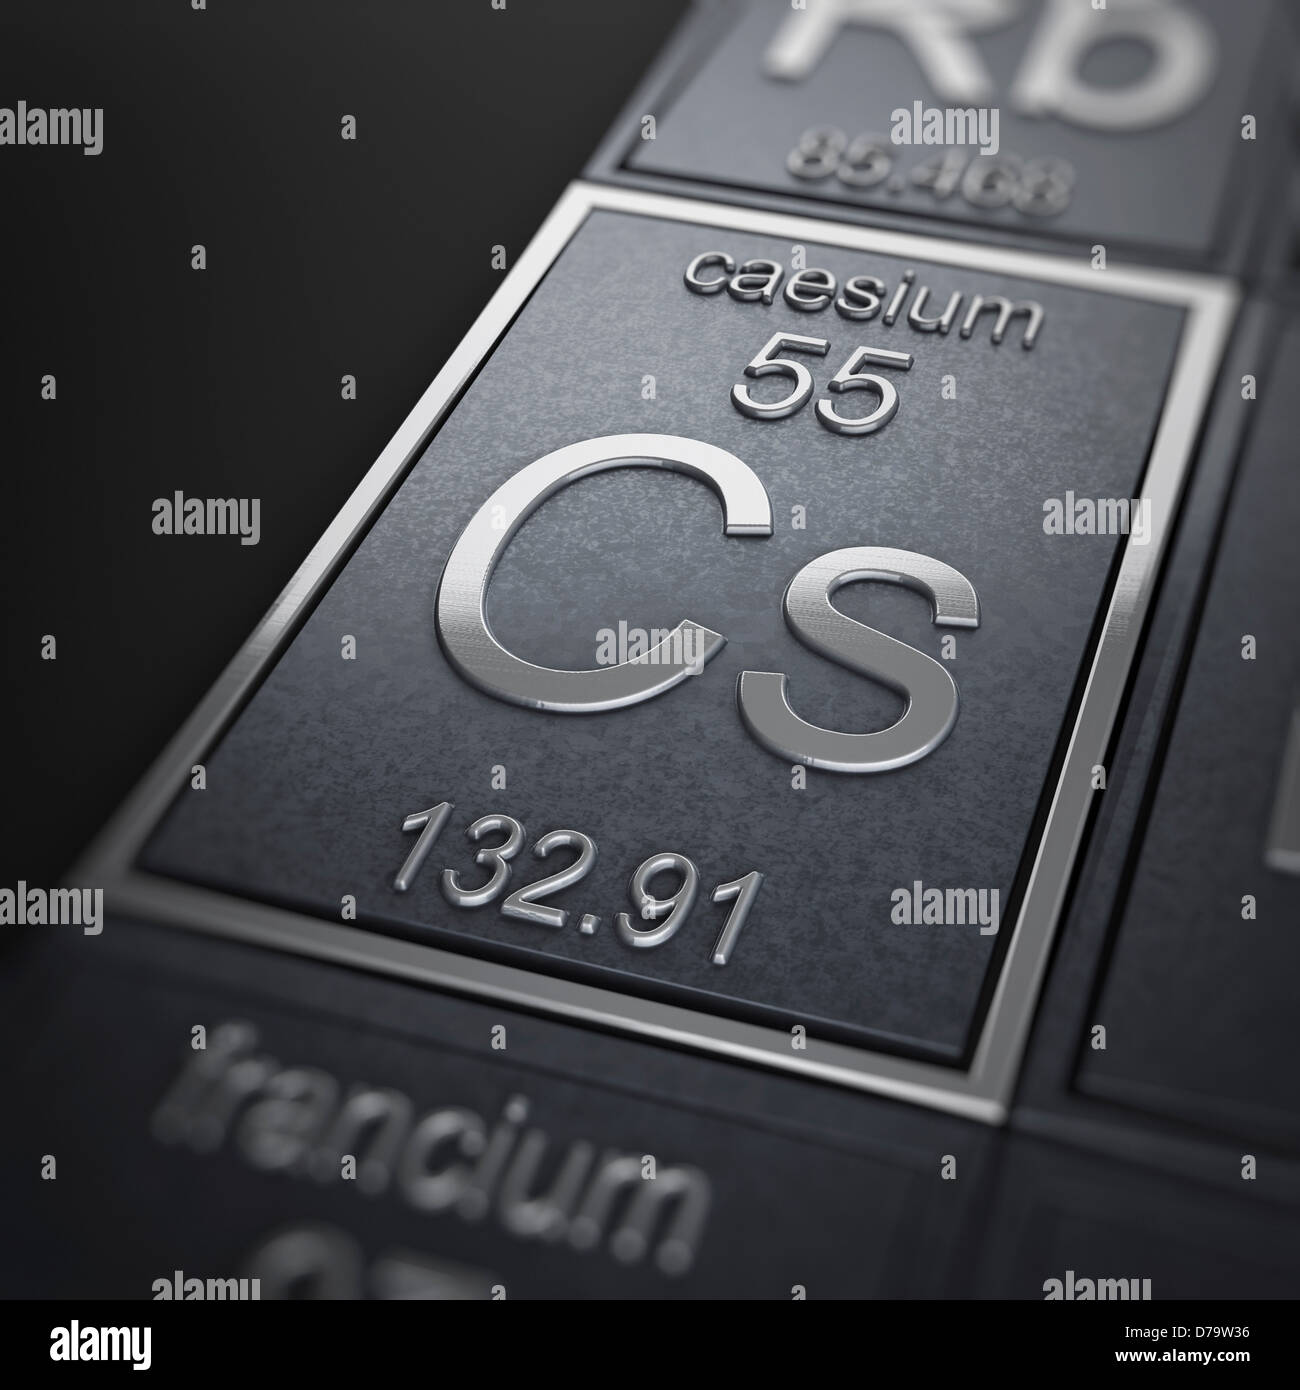 caesium group